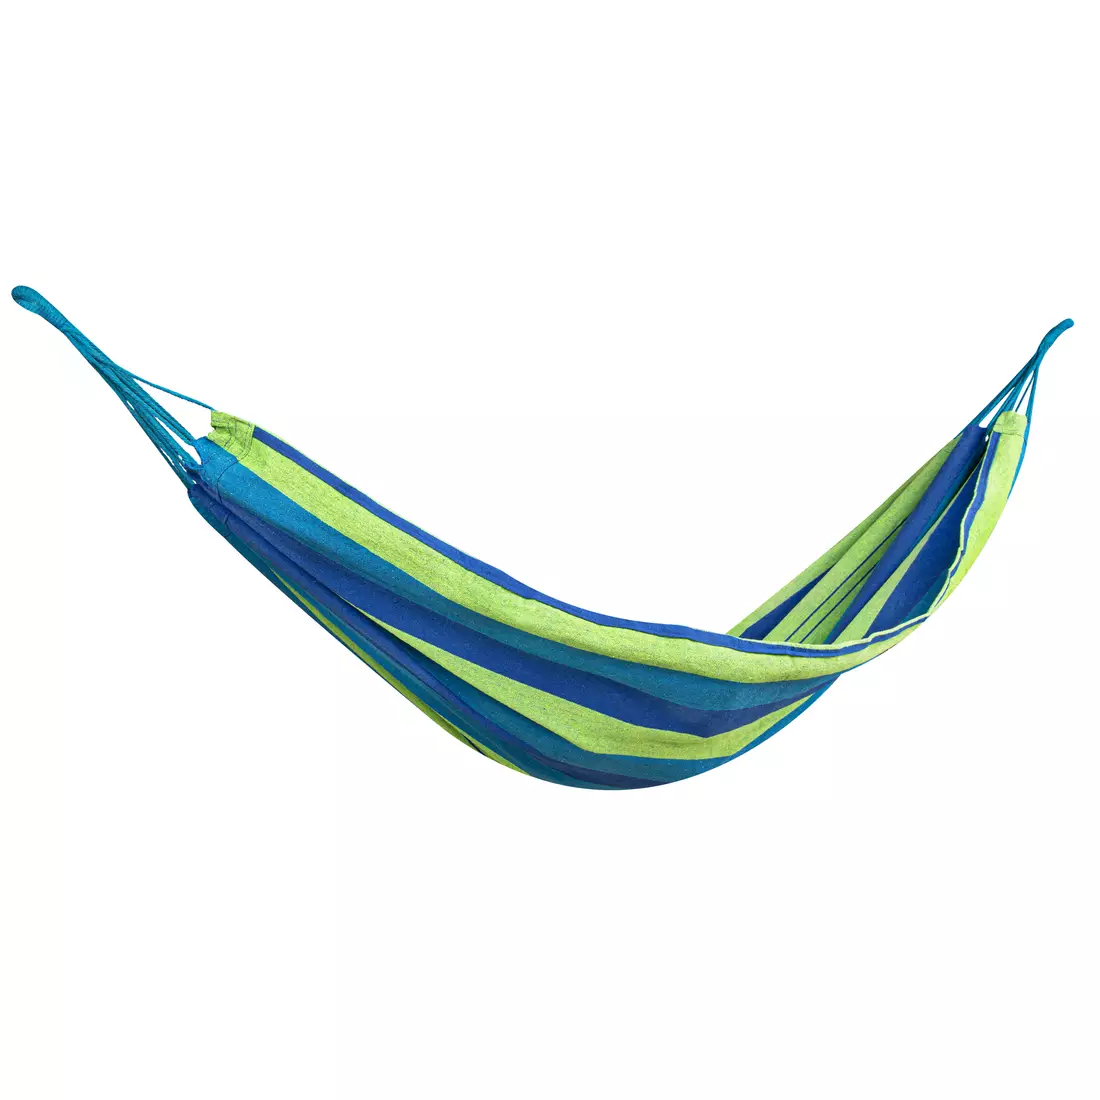 SPOKEY IPANEMA hammock green and blue